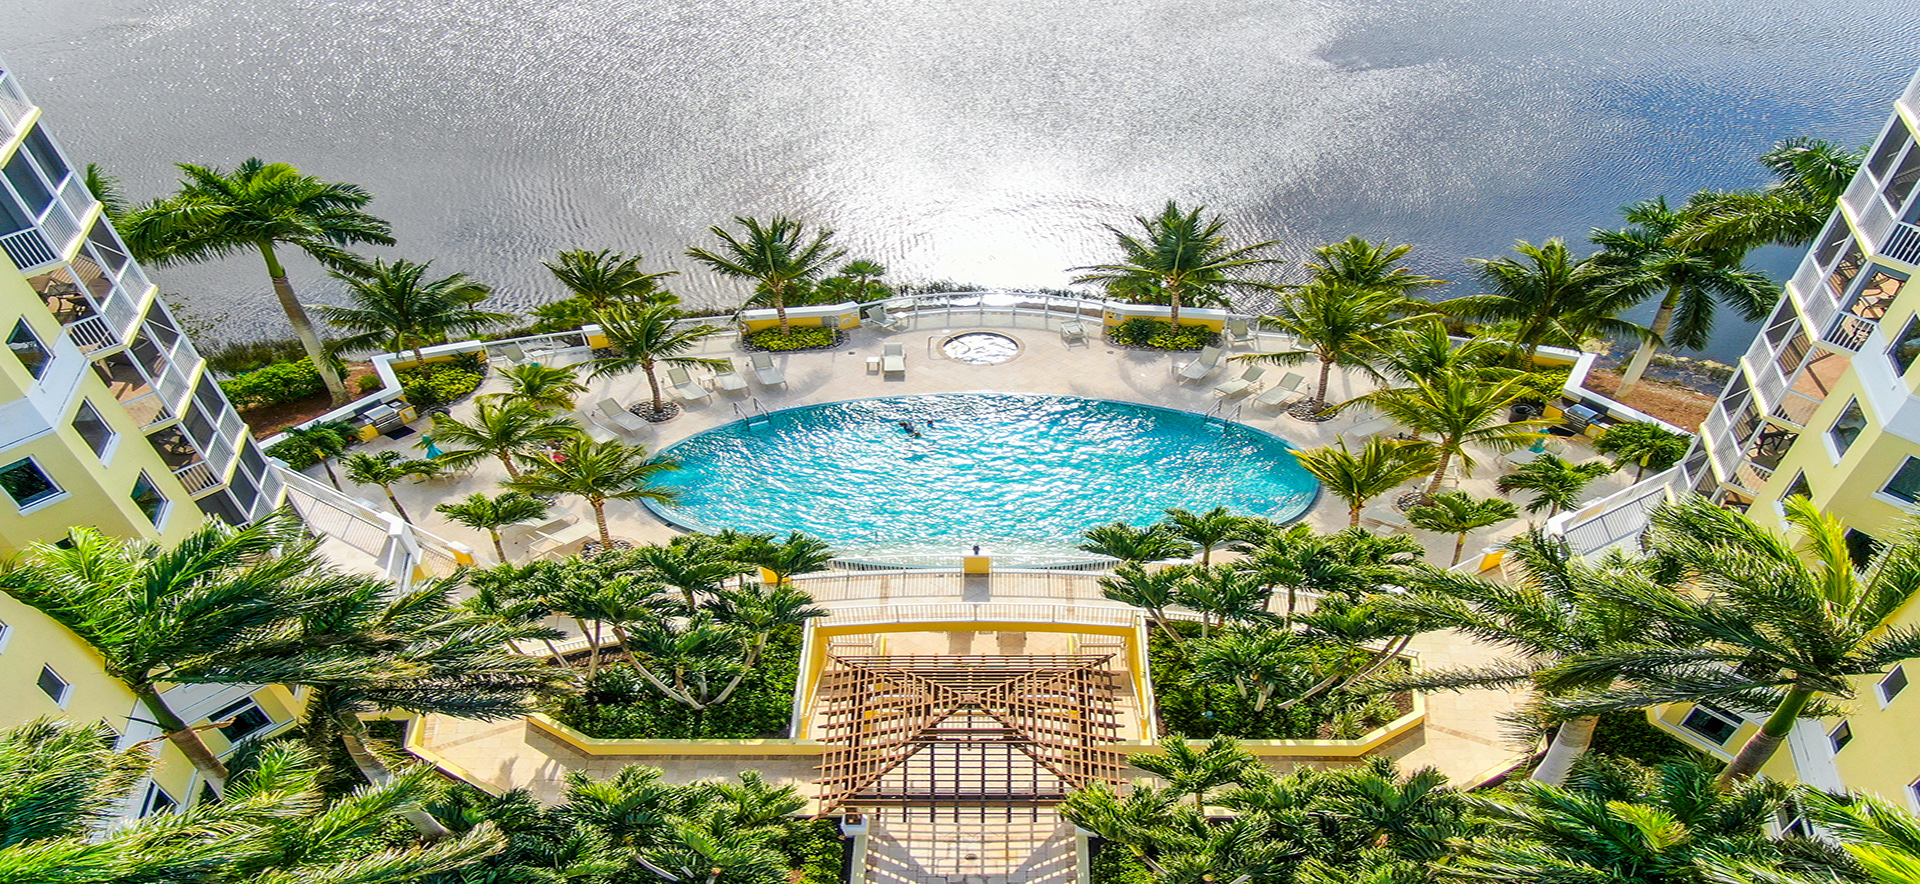 Jasmine Bay's Resort-style Pool